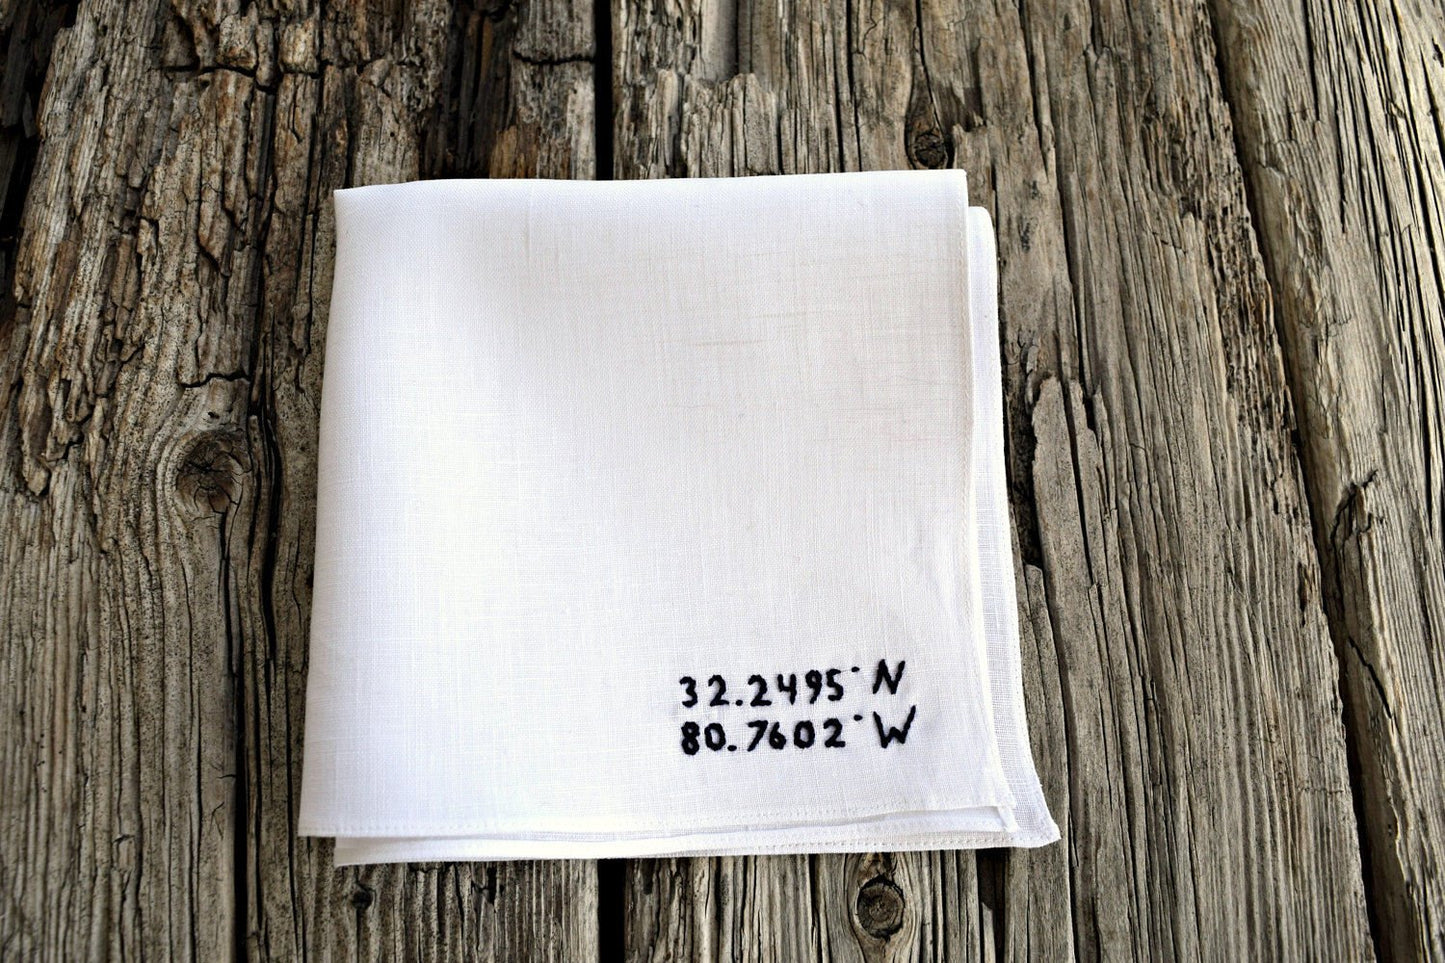 Embroidered wedding handkerchief with latitude and longitude